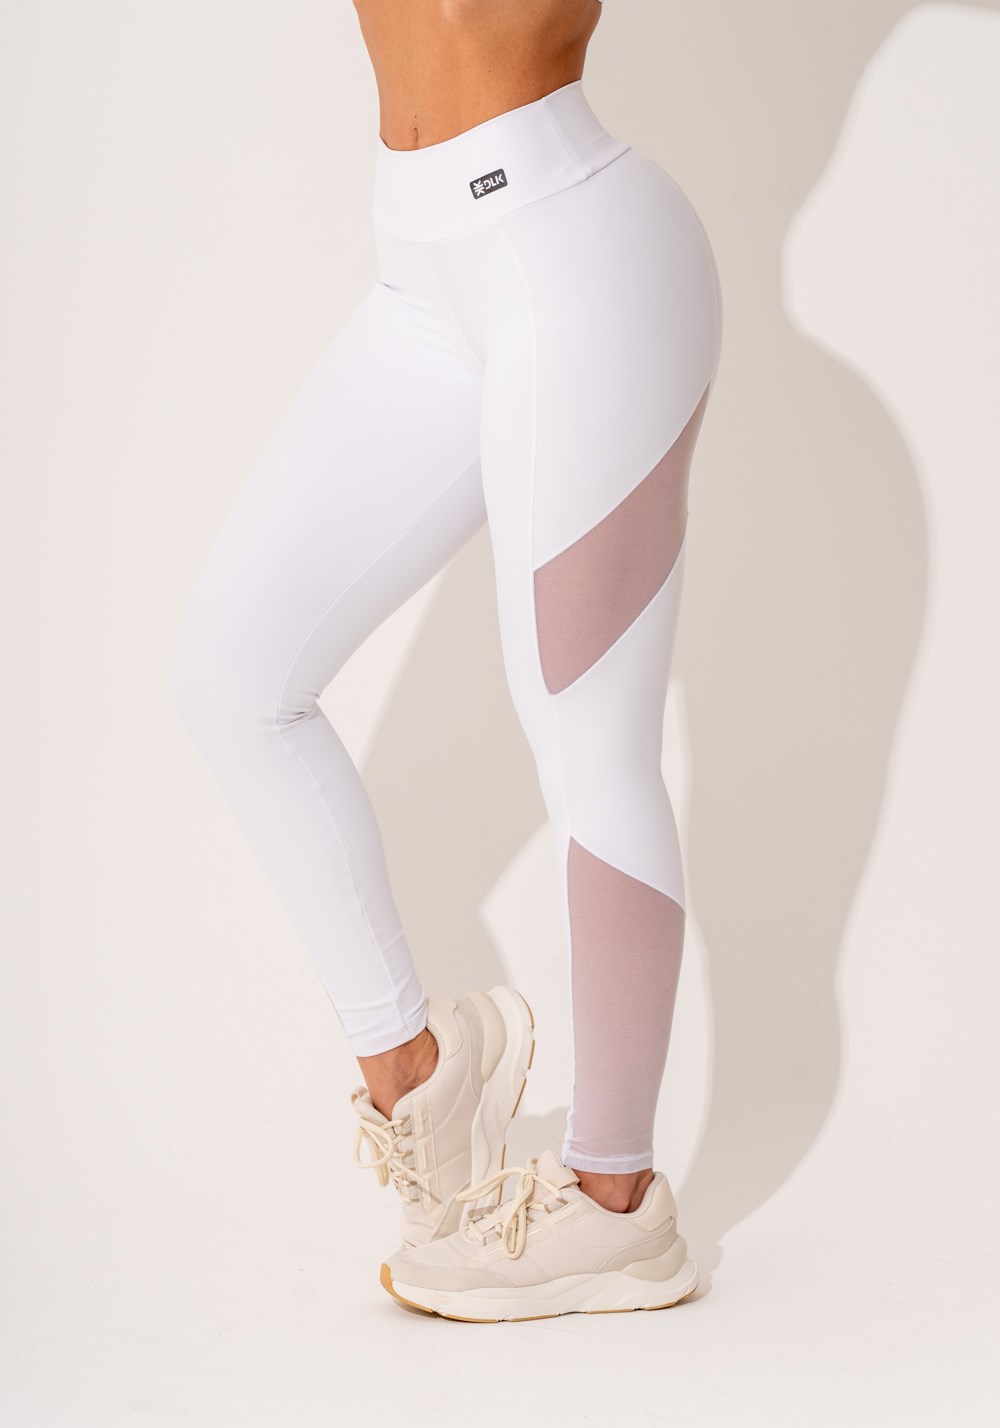 Legging Fitness Feminina Texturizada Off White LG1048